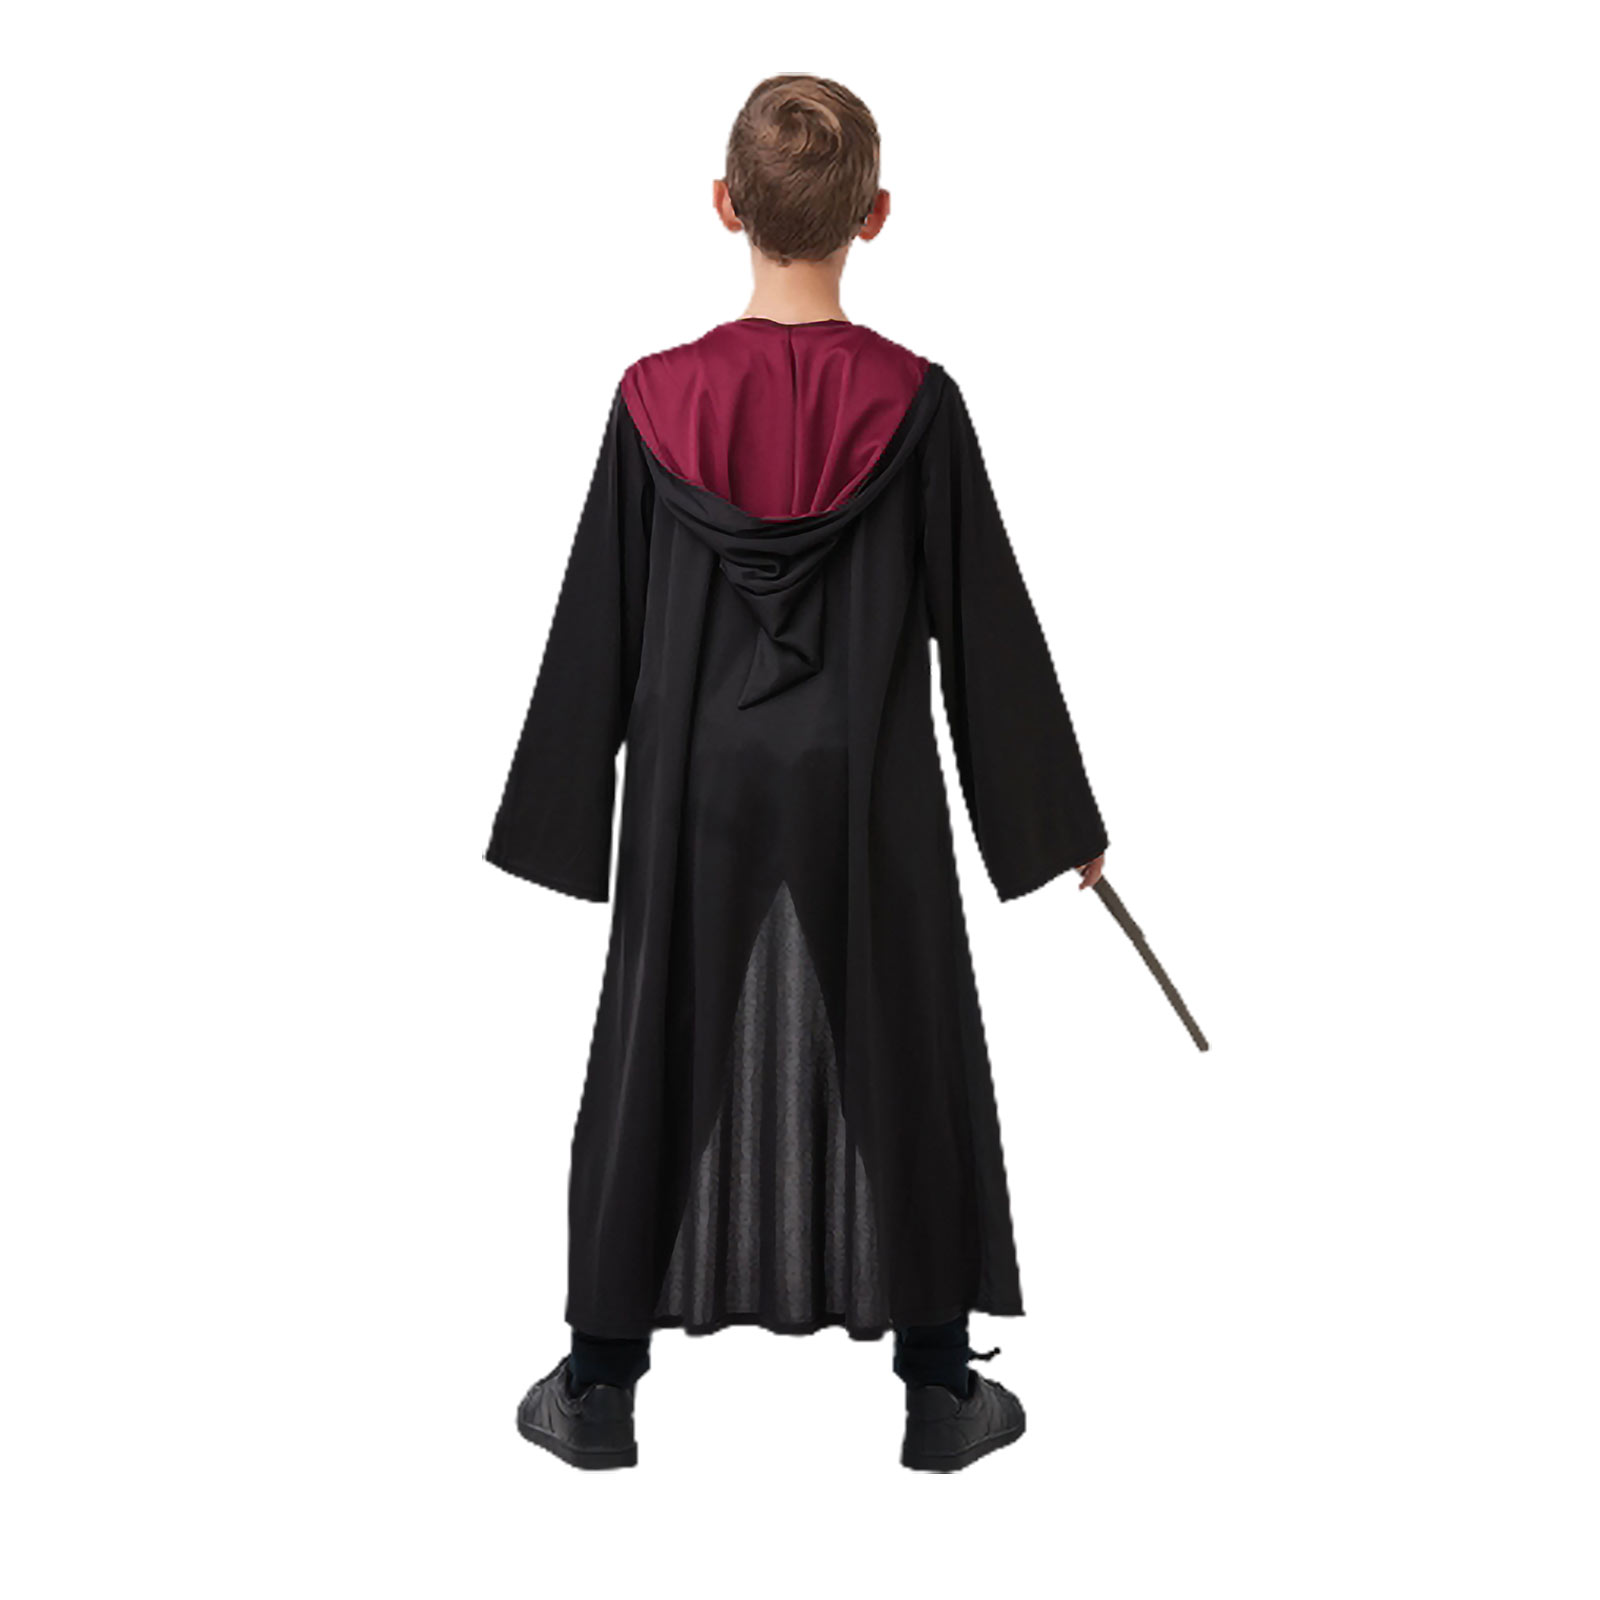 Harry Potter - 3-piece Children's Costume Set